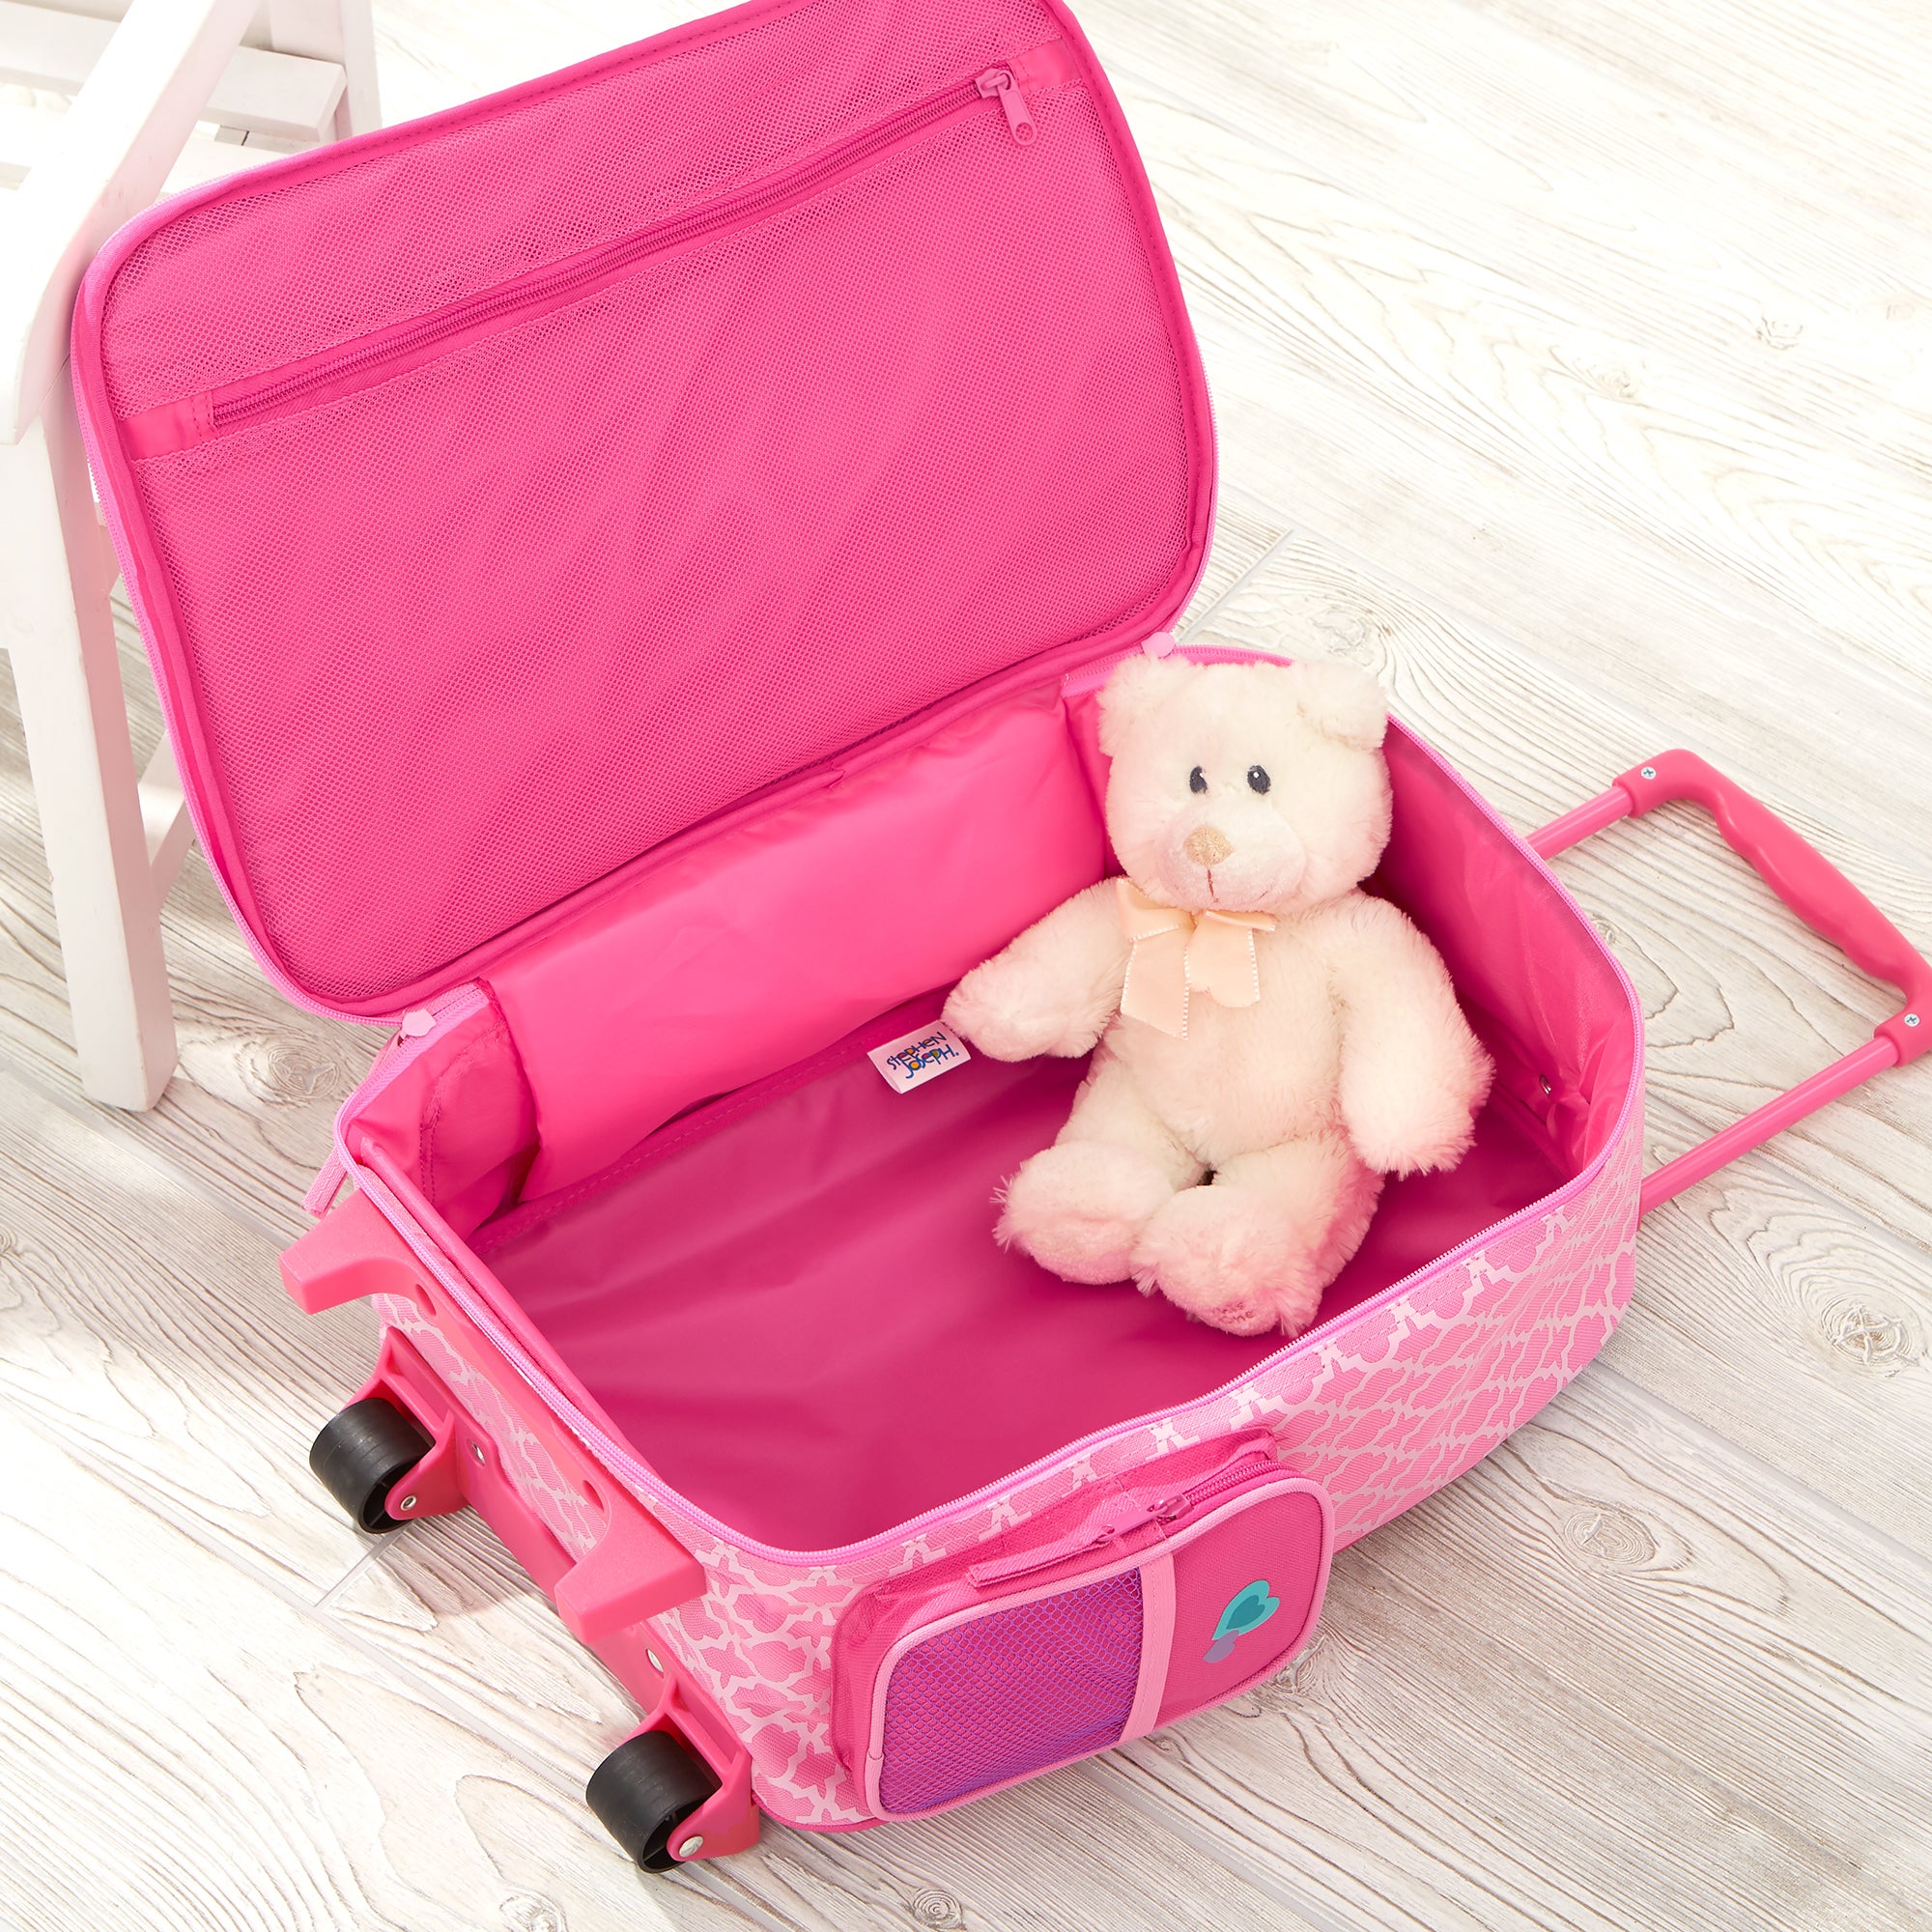 24022 - Unicorn Personalized Kids Rolling Luggage by Stephen Joseph